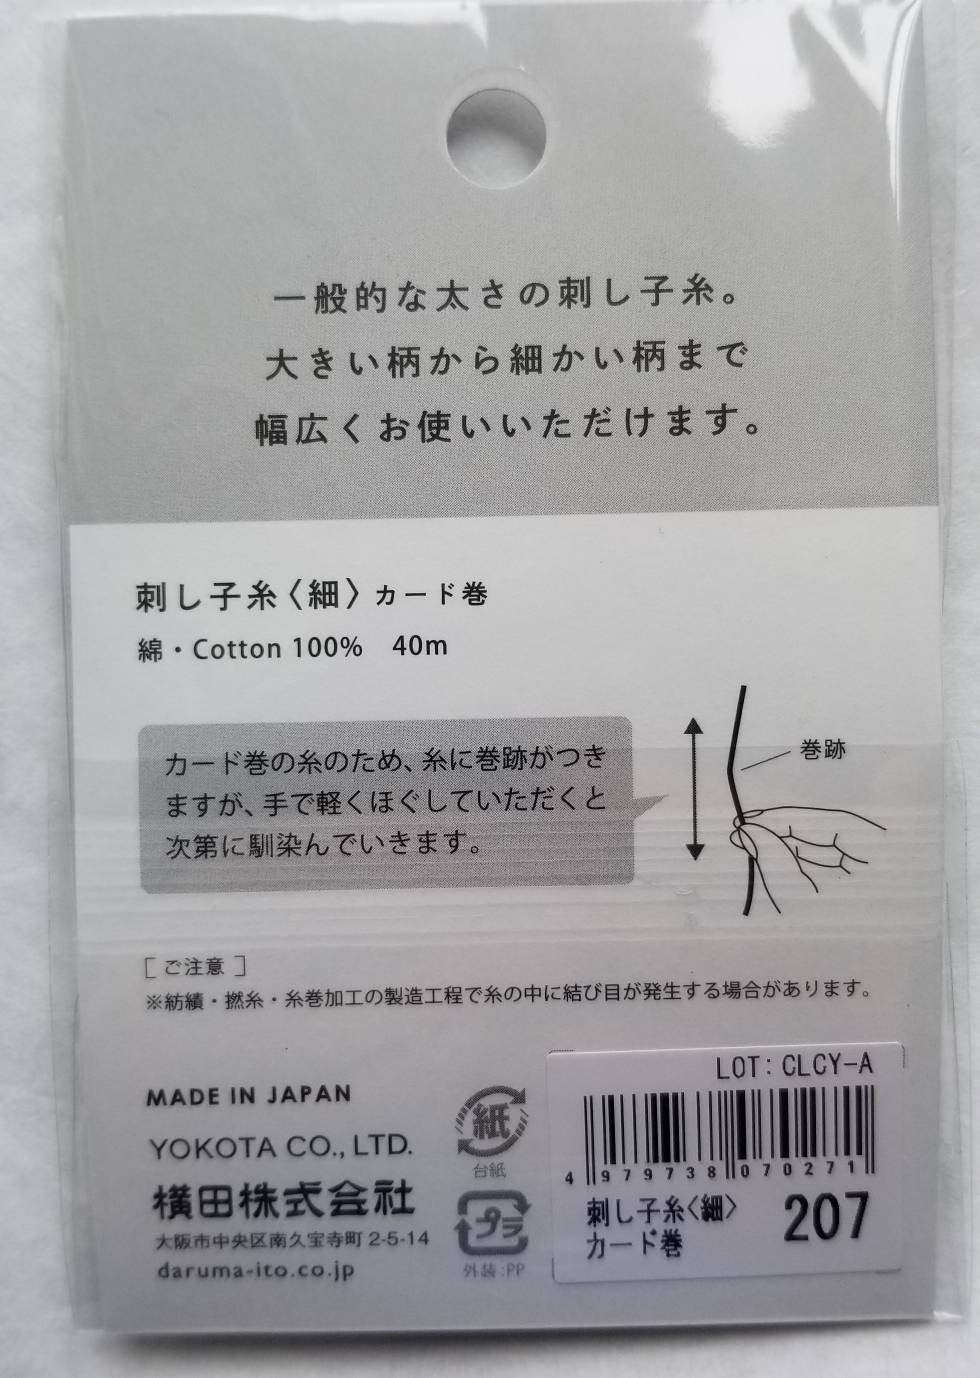 Daruma #207 EMERALD Japanese Cotton SASHIKO thread 40 meter skein 20/4 エメラルド green